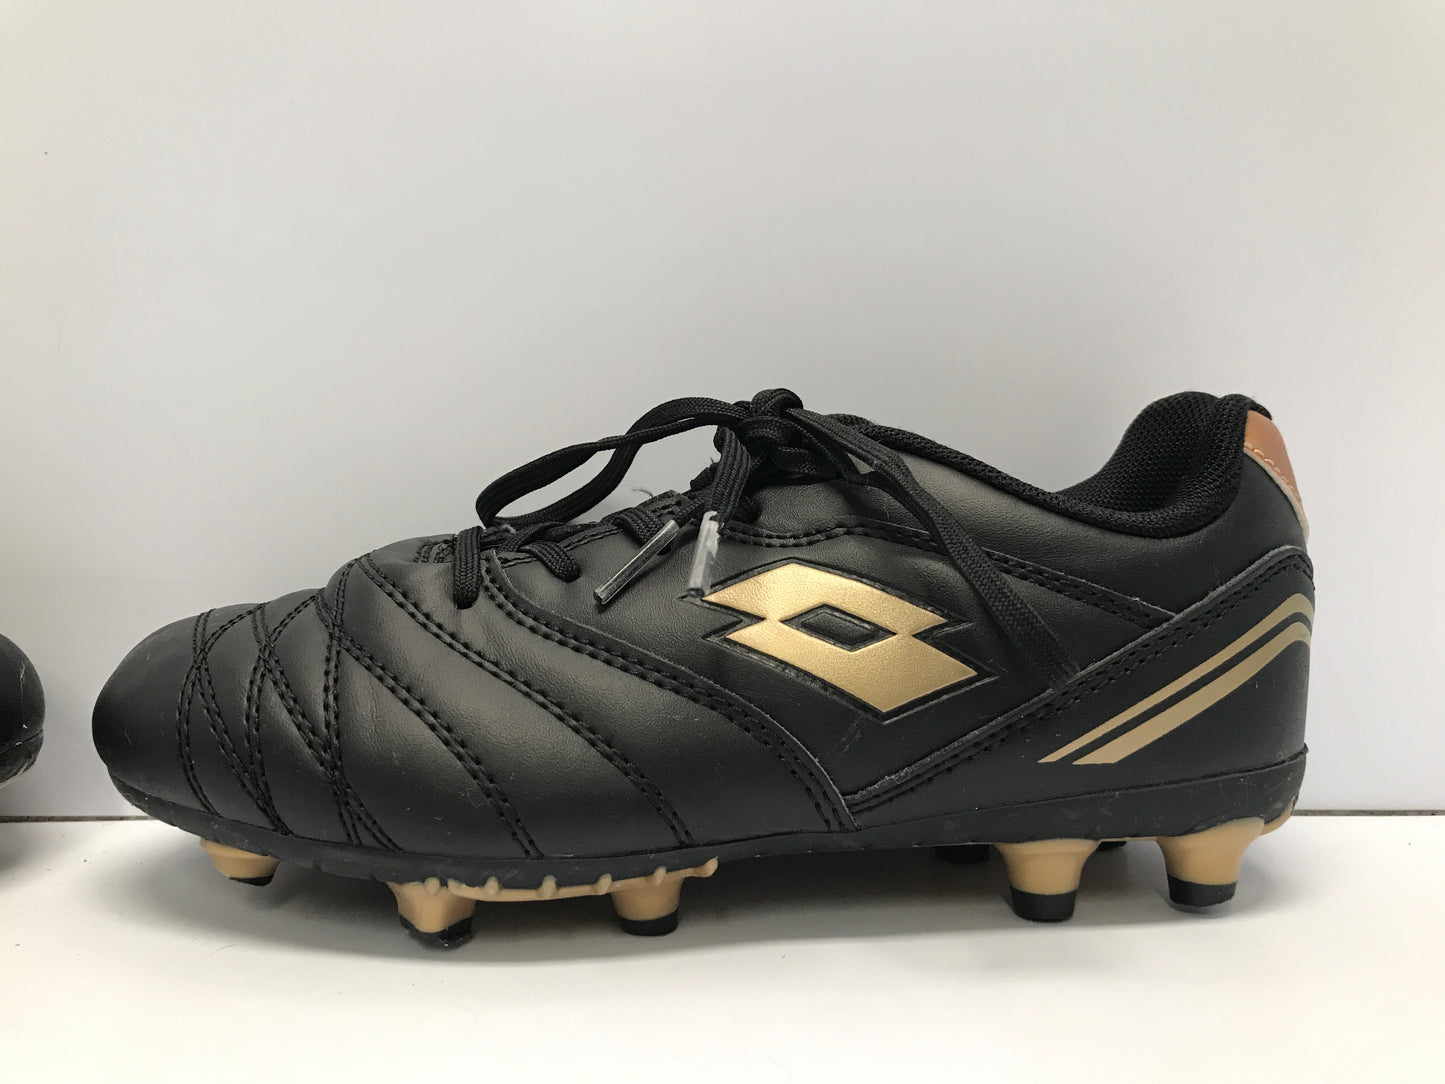 Soccer Shoes Cleats Child Size 2 Lotto Black Bronze Excellent